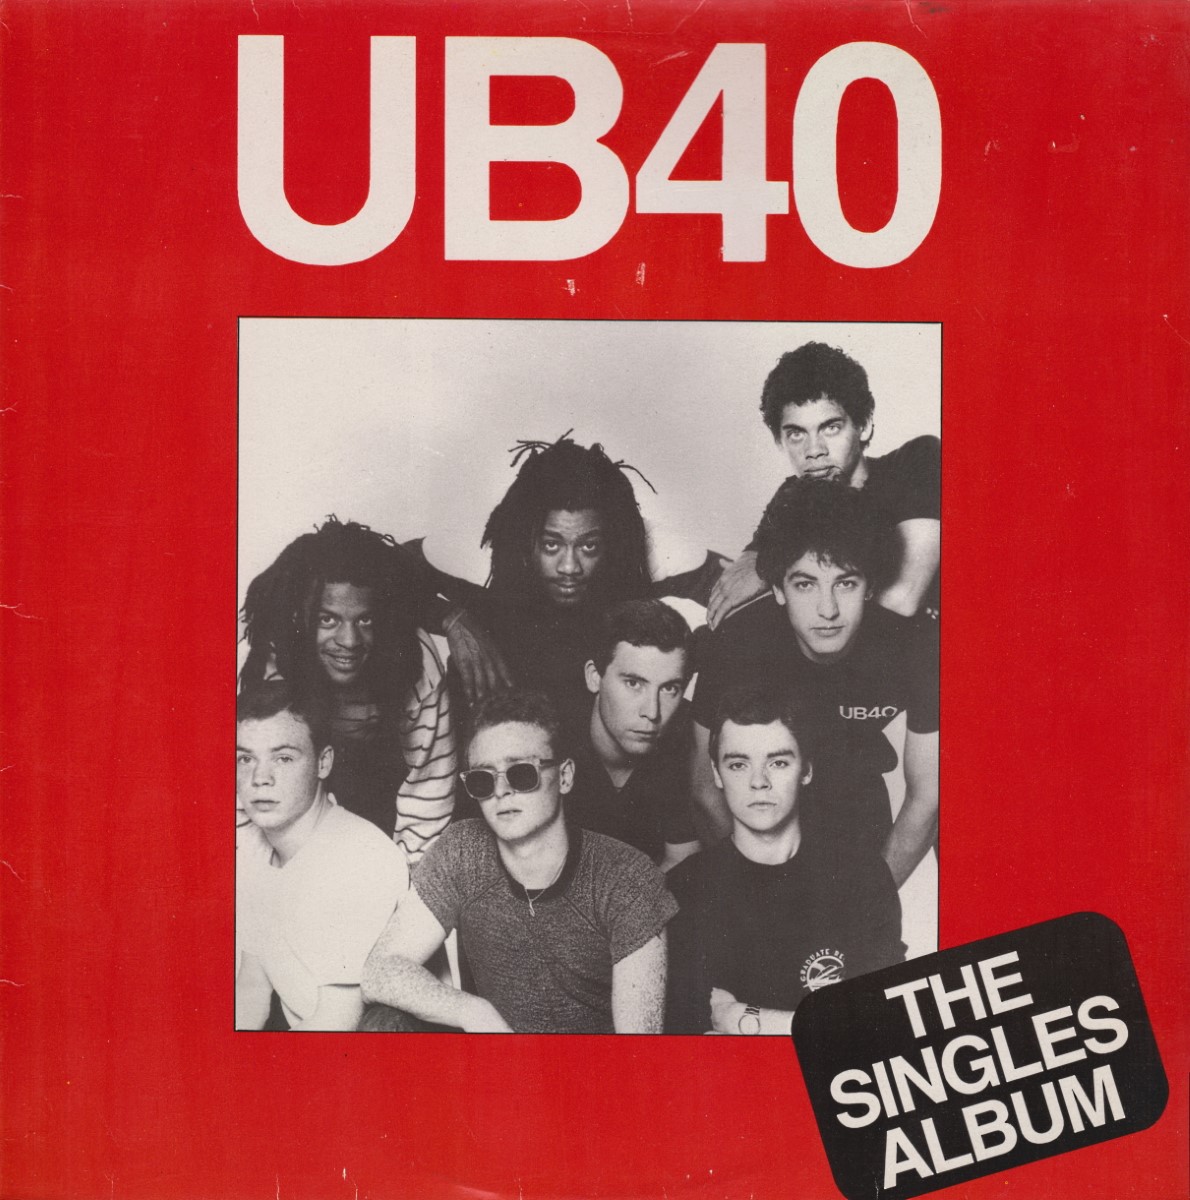 UB40 - The Singles Album (1982)